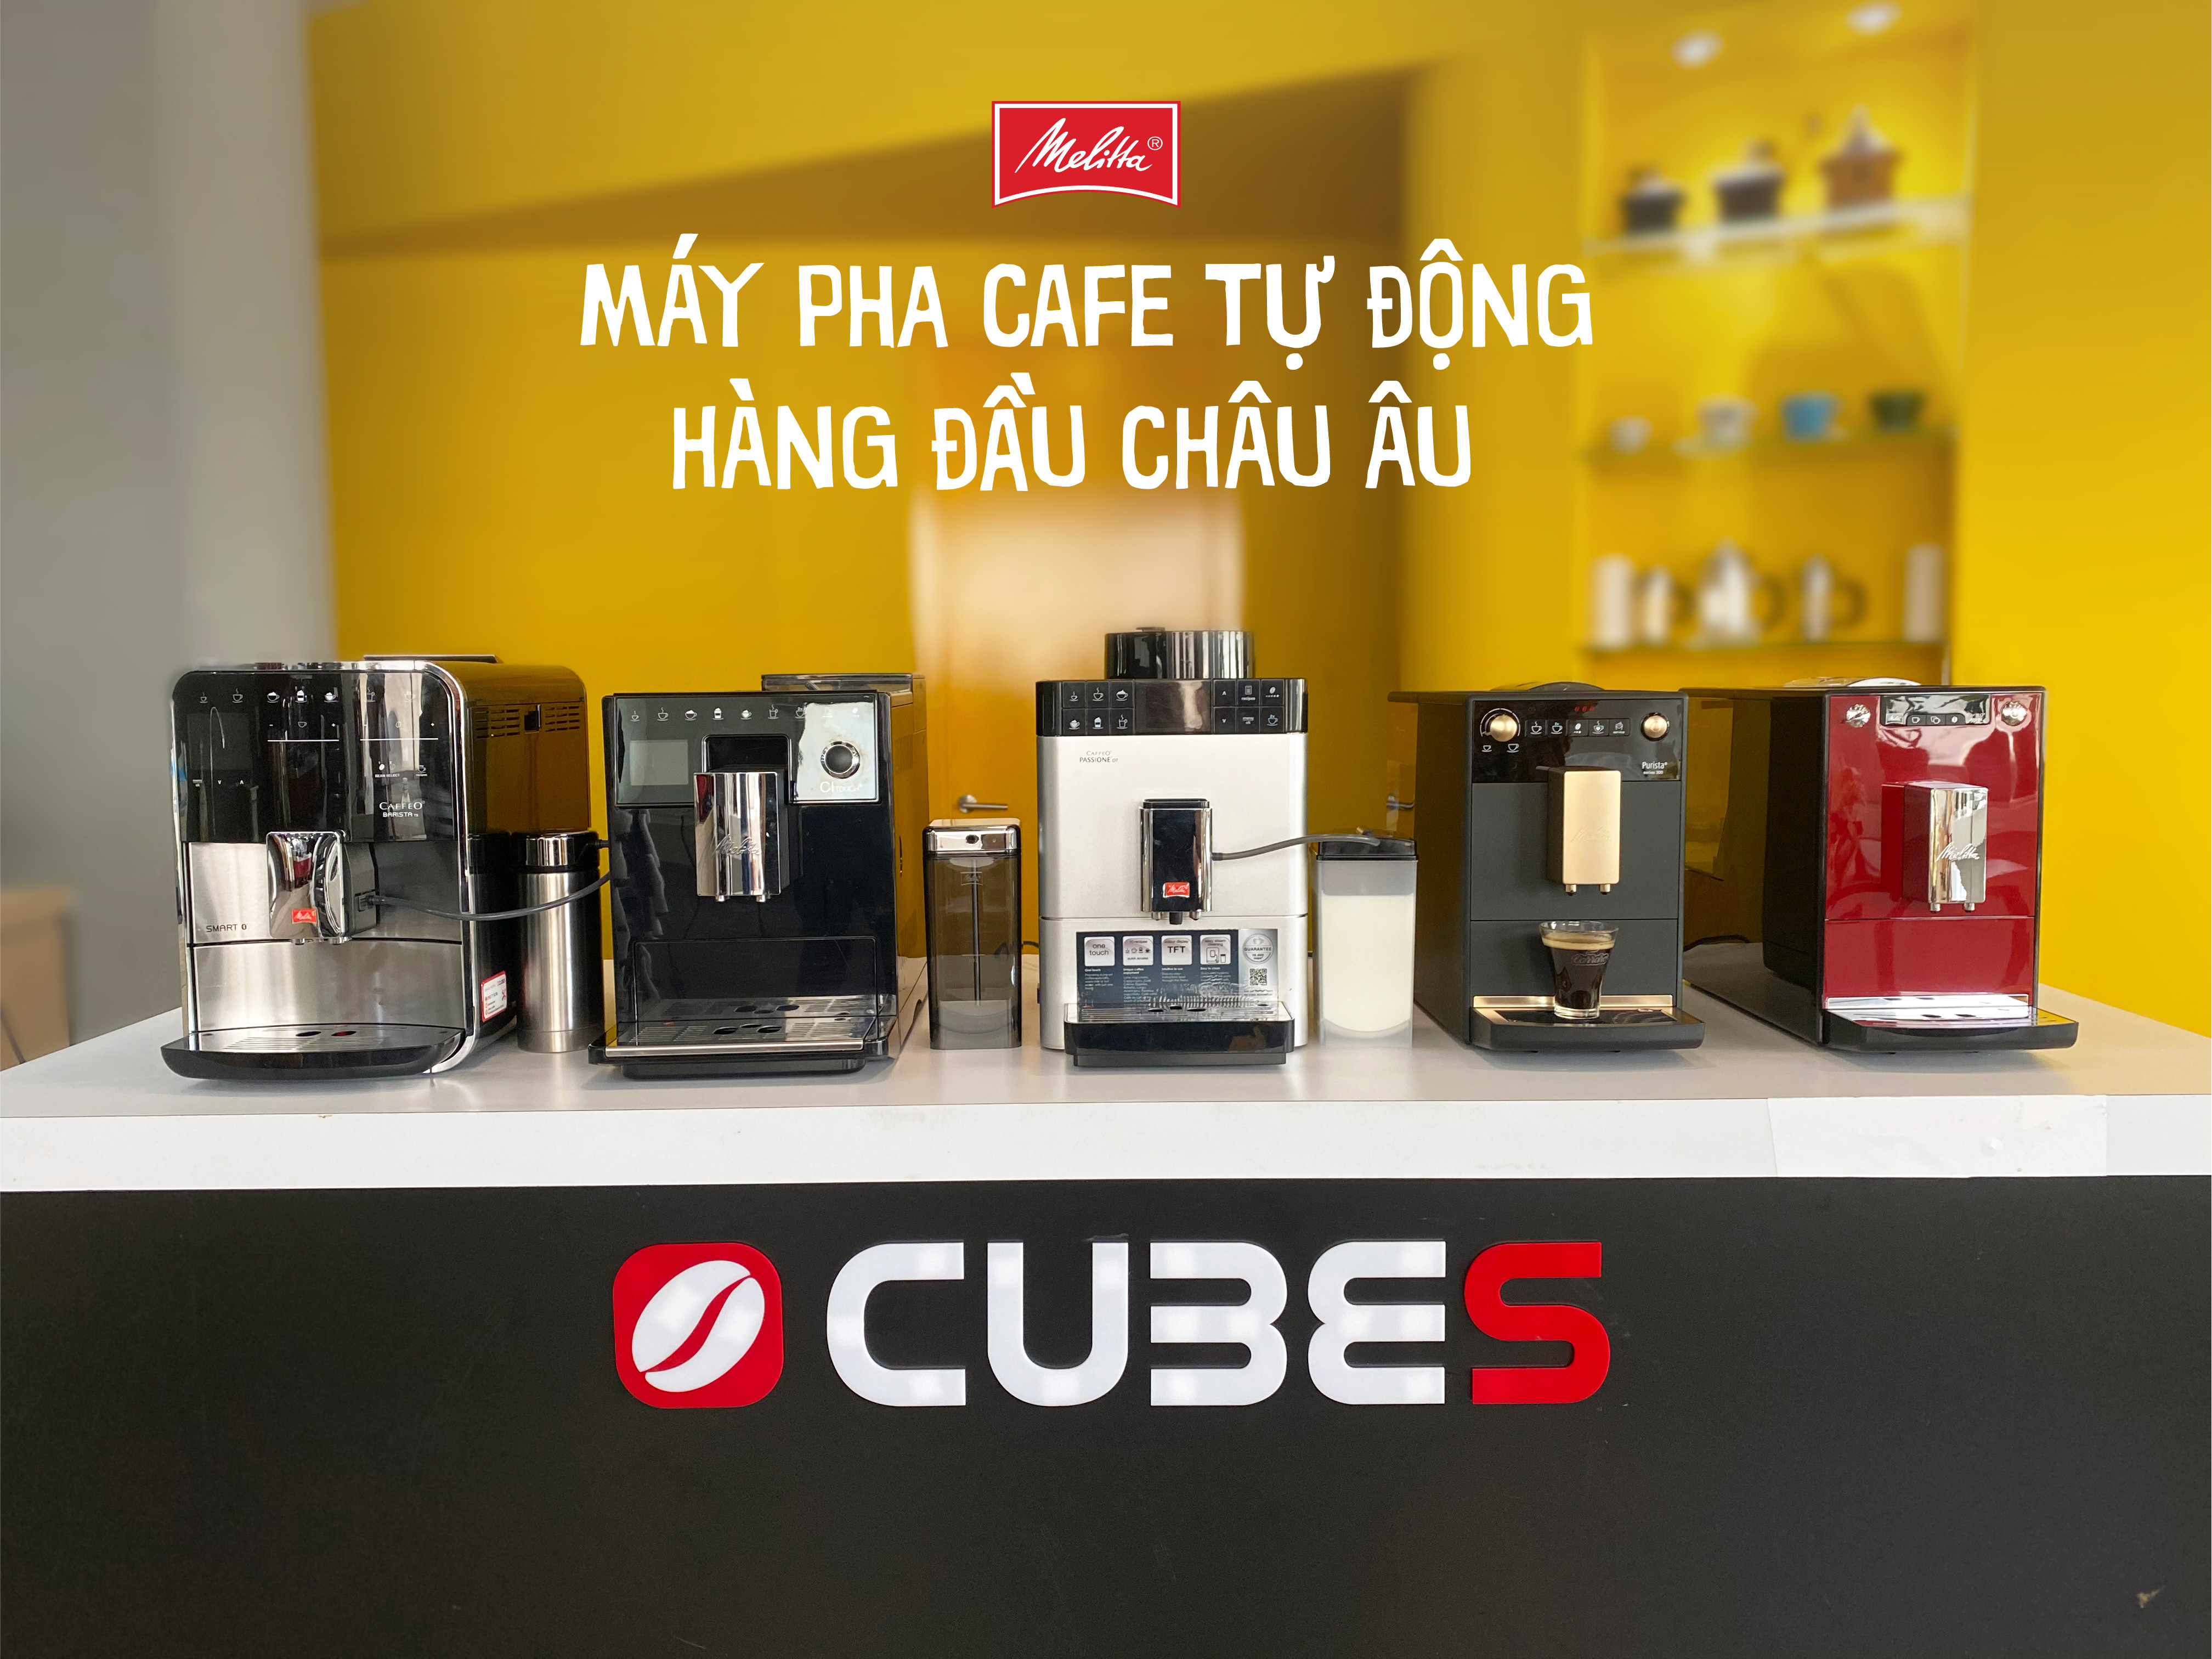 order 6 may pha cafe tu dong hang dau chau au logo melitta 1